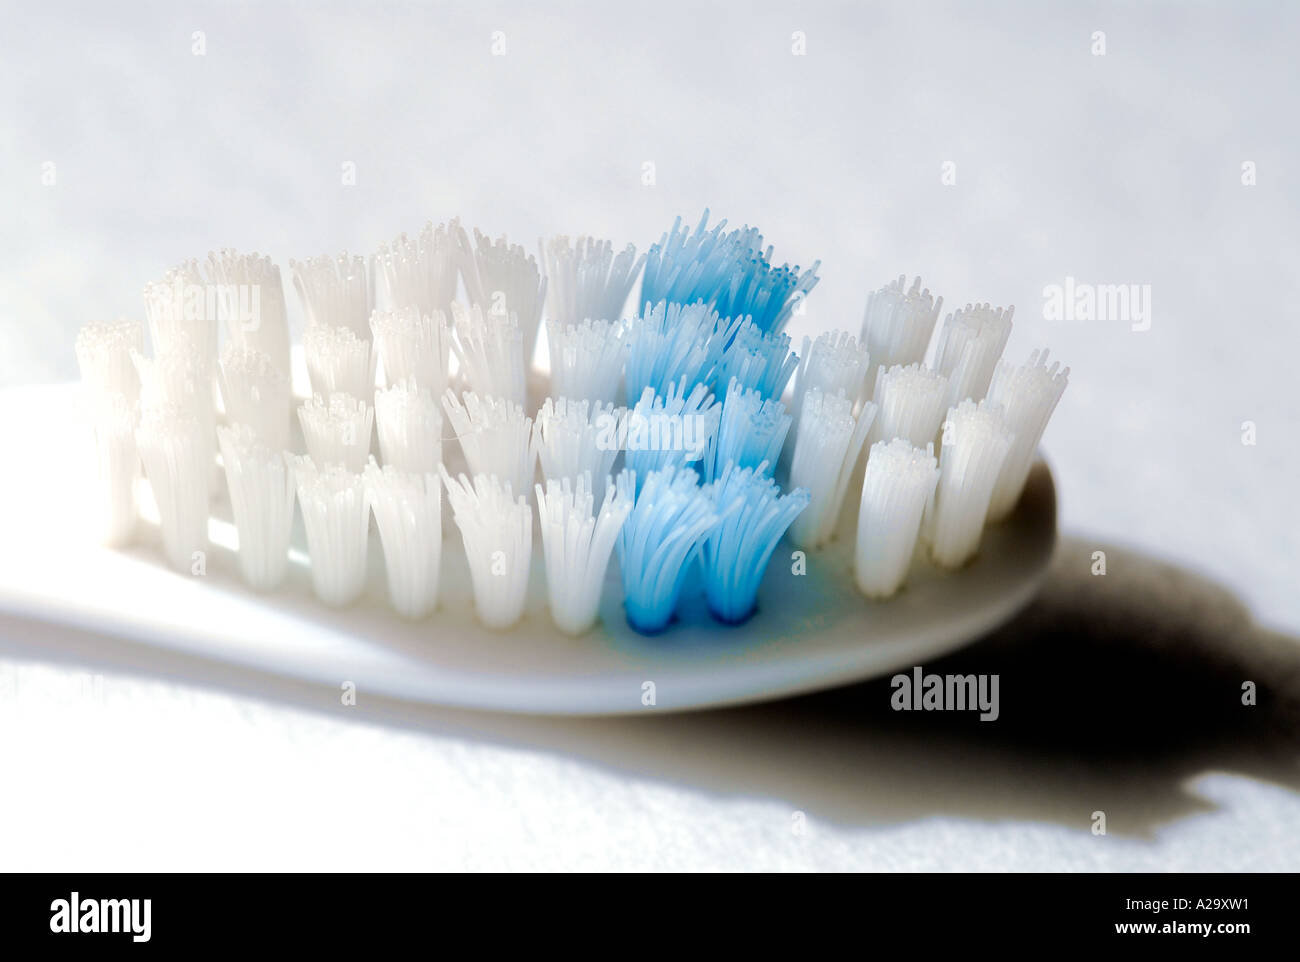 Toothbrush head, close-up Stock Photo